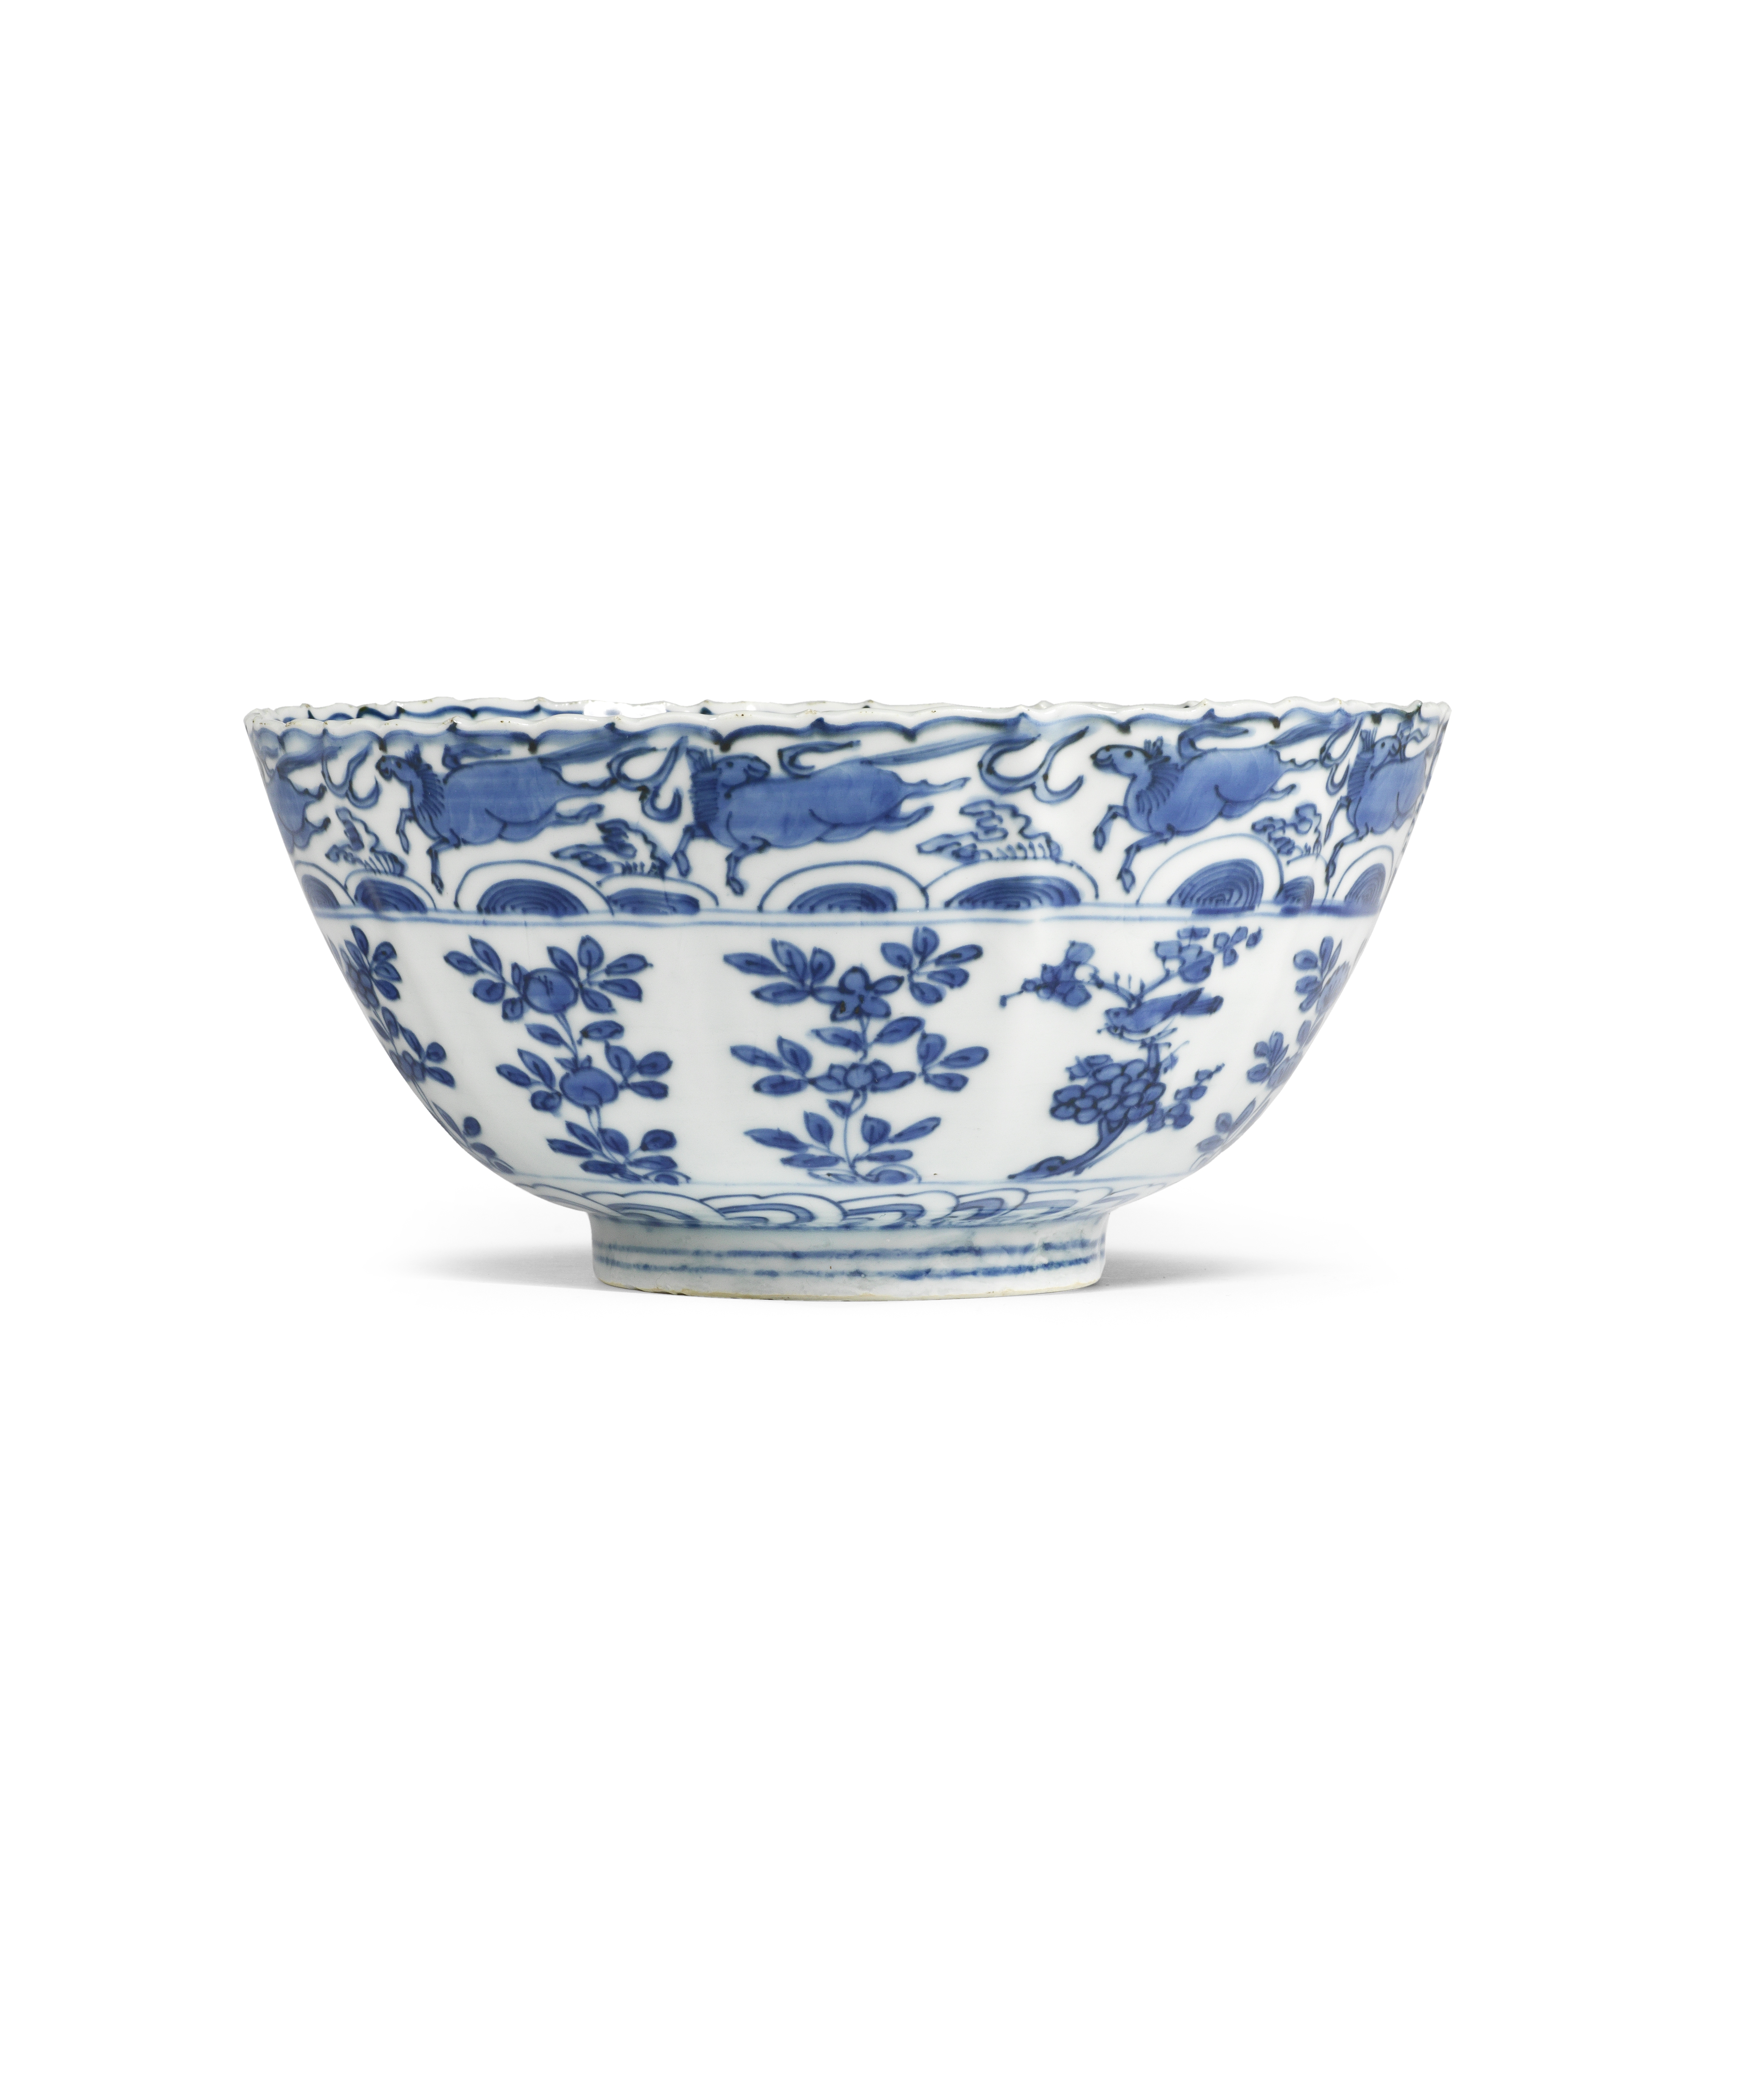 A blue and white 'Kraak porcelain' lobed bowl Circa 1585-1600